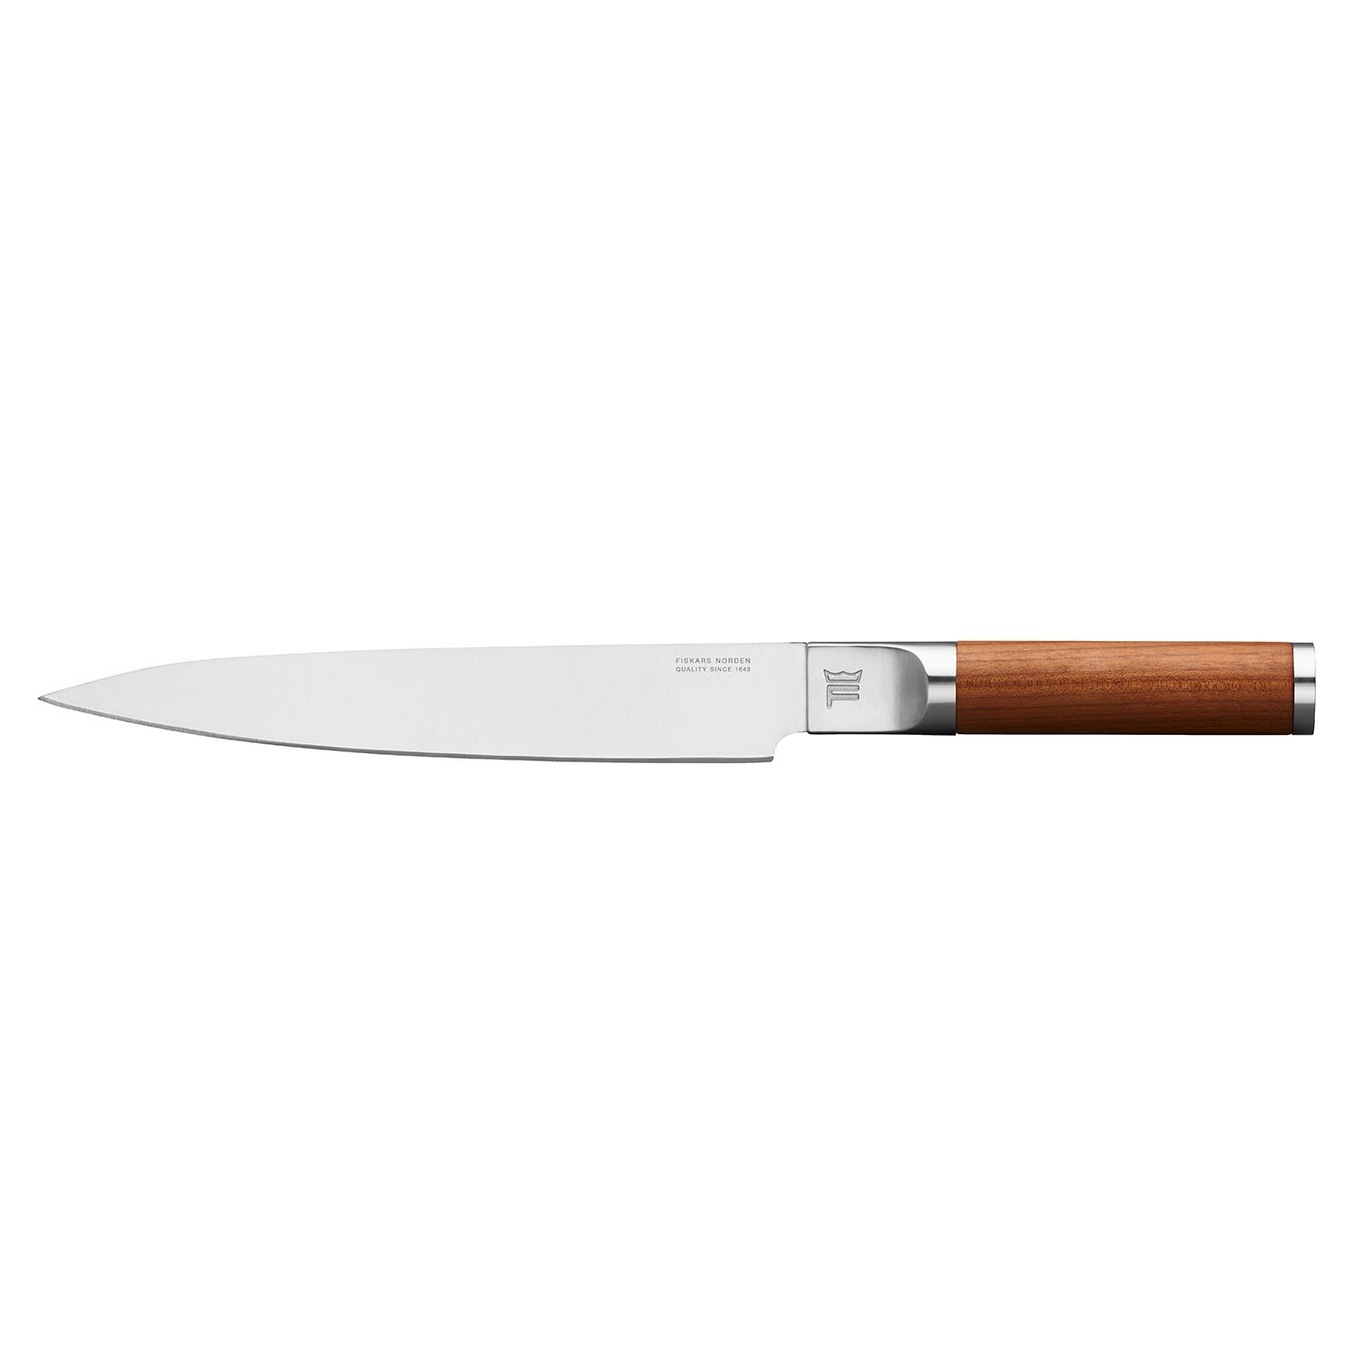 https://royaldesign.com/image/2/fiskars-norden-carving-knife-20-cm-0?w=800&quality=80